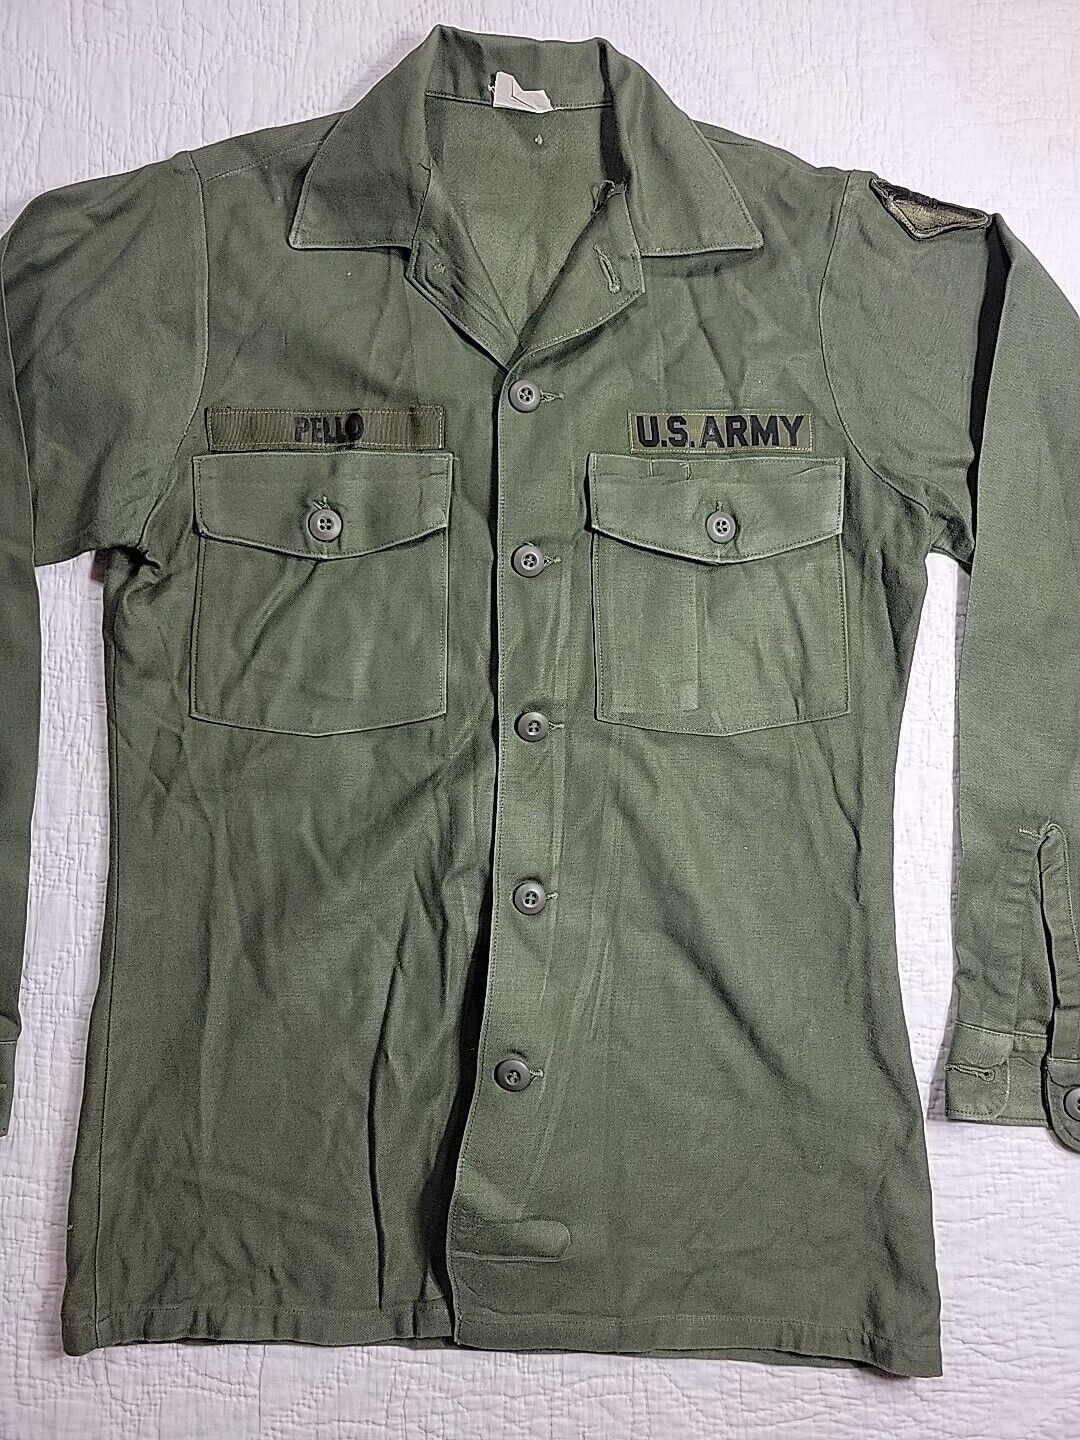 Vintage US Army Vietnam Era OG-107 Sateen Fatigue Duty Shirt Size Small 14.5x33